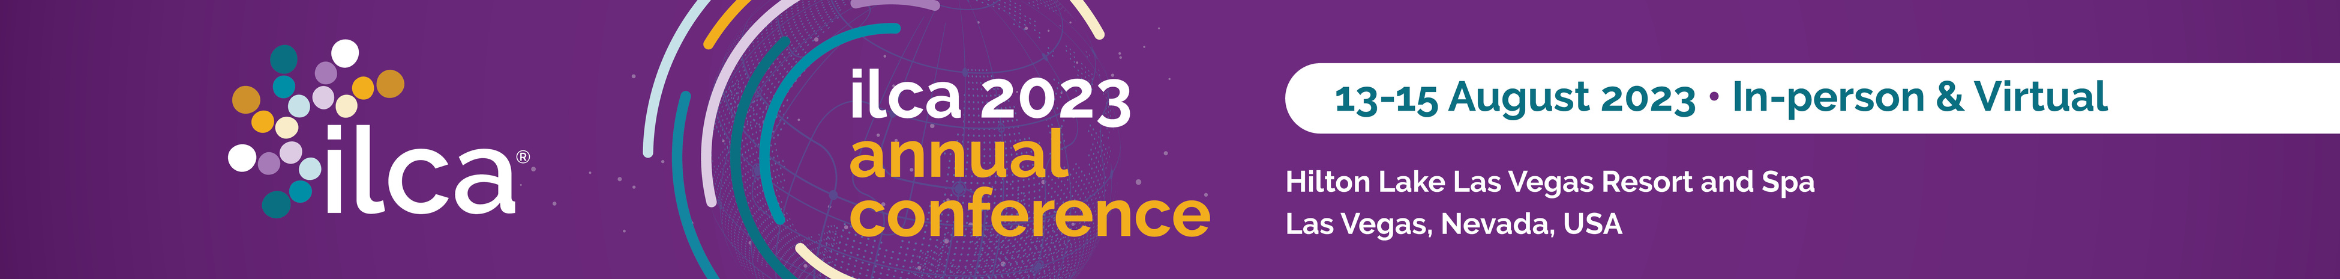 ILCA 2023 Annual Conference Main banner